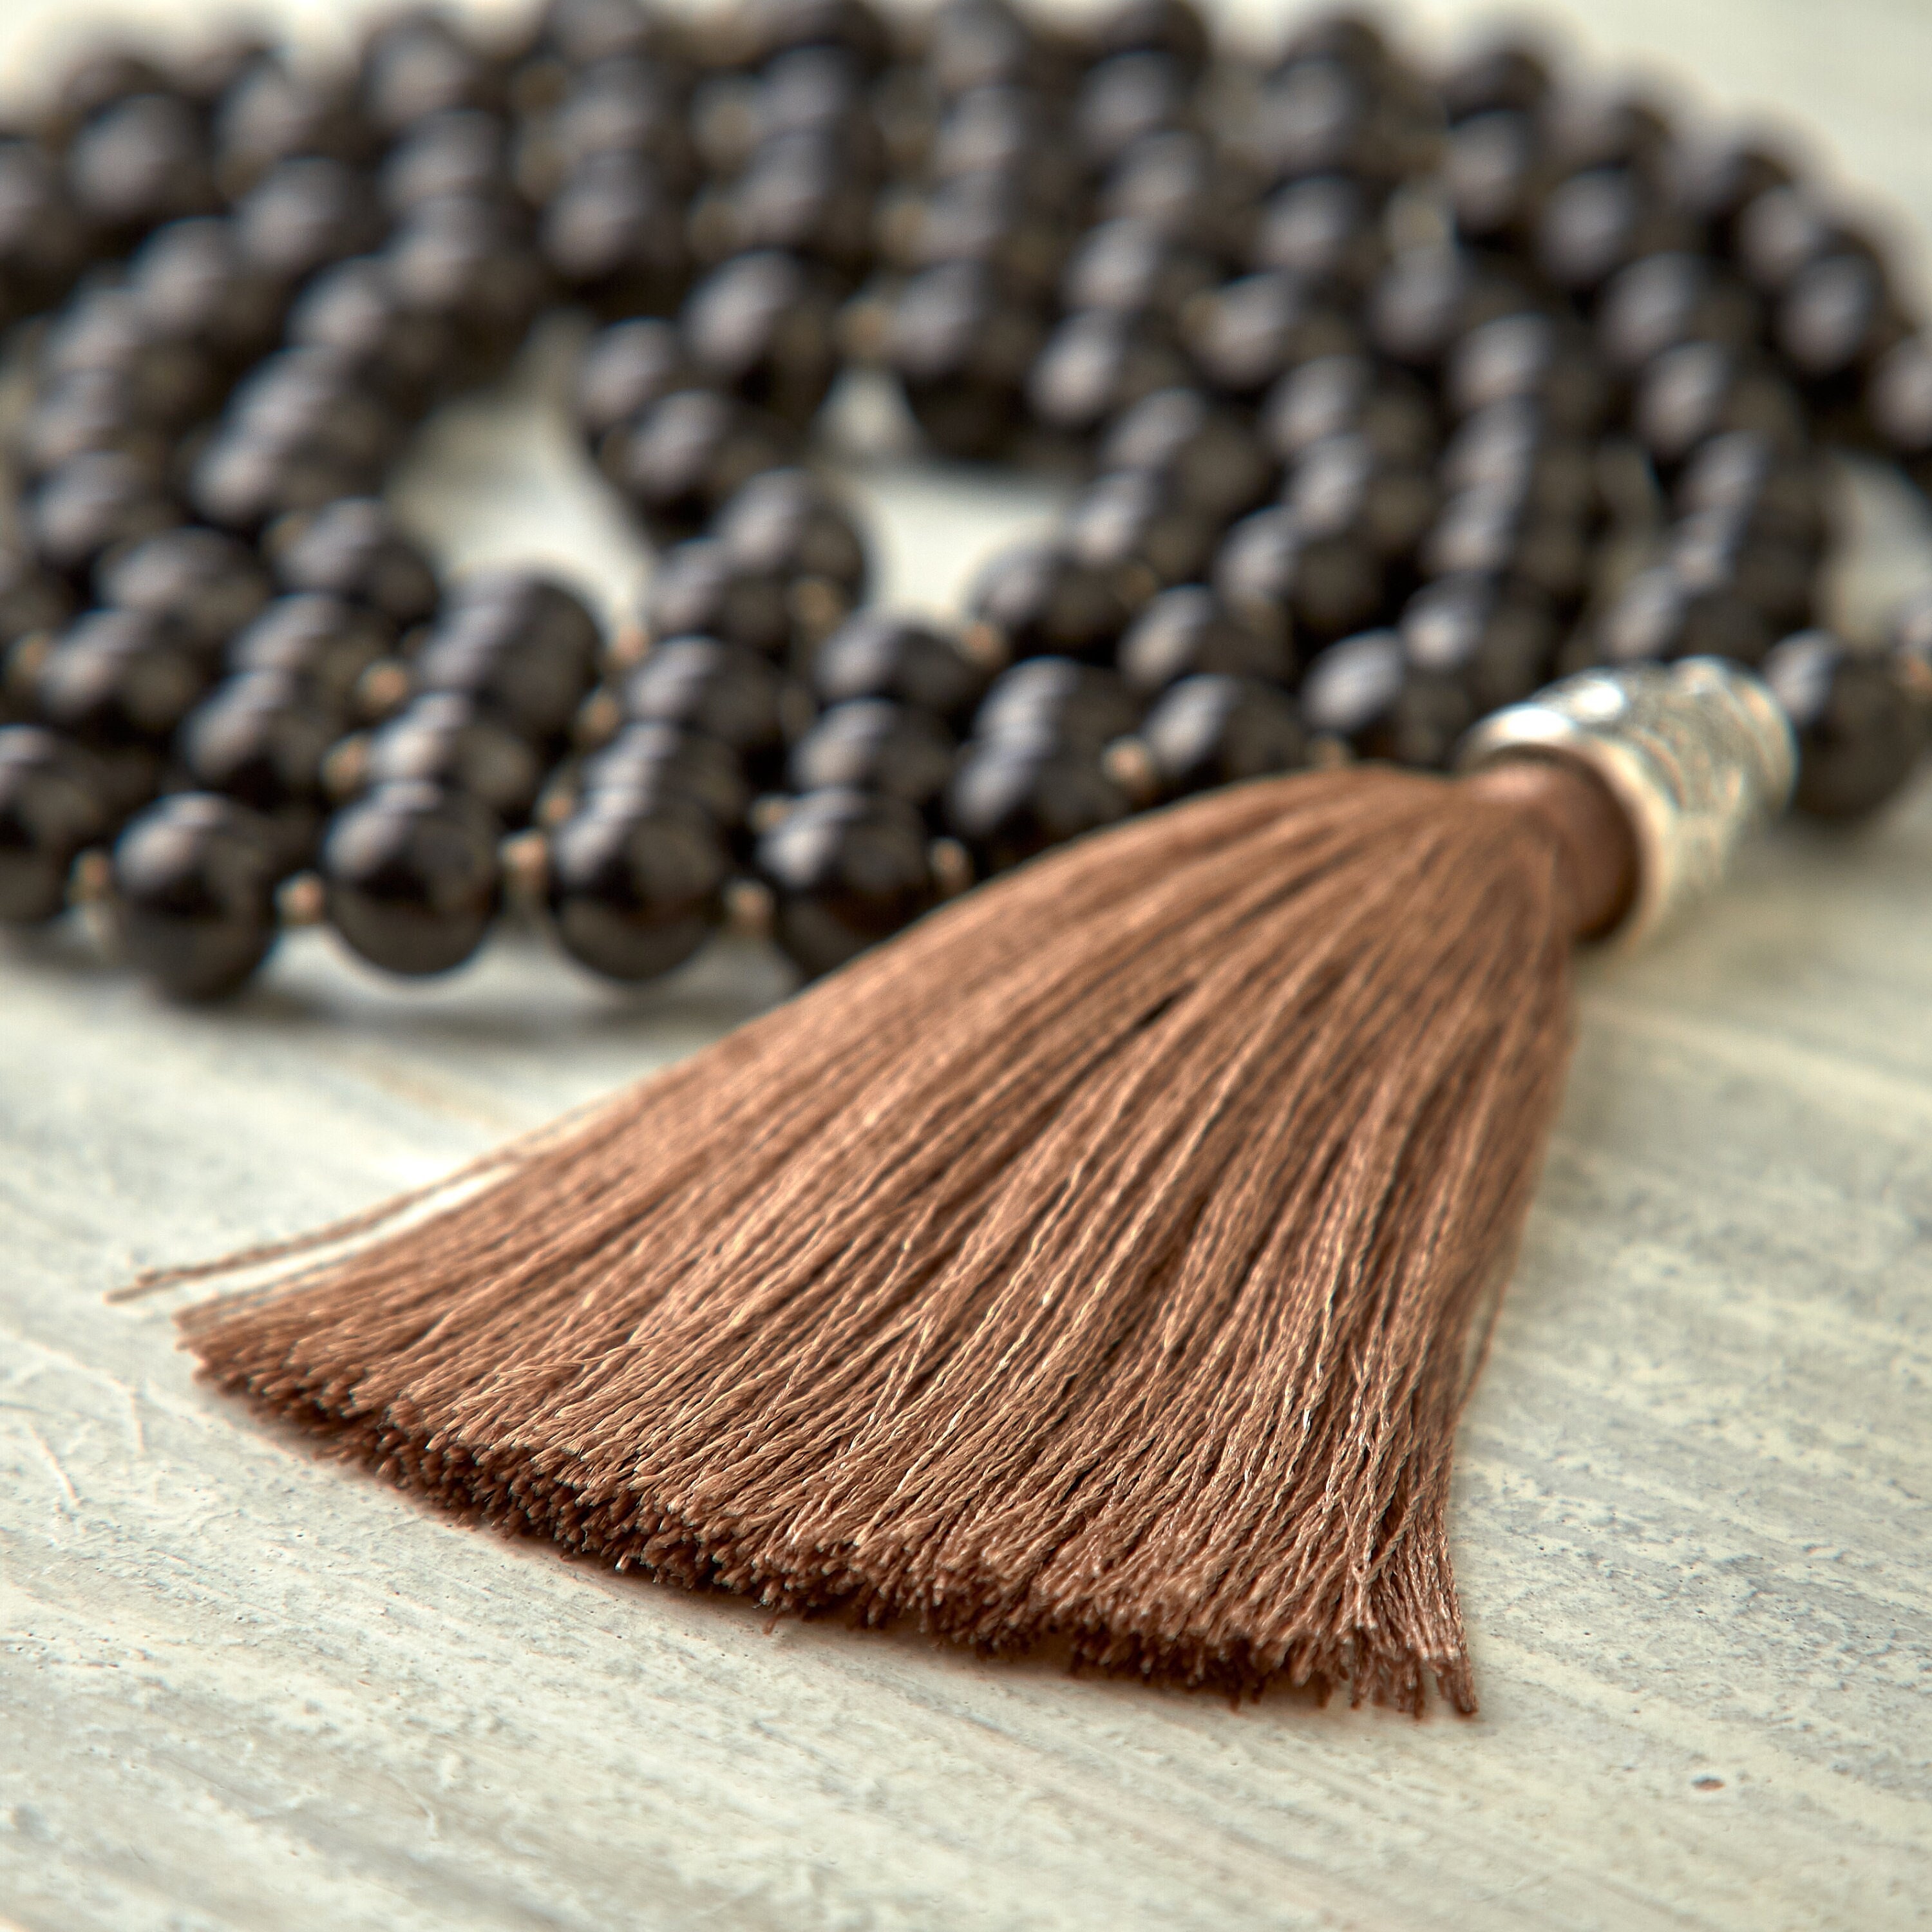 108 Bead Mala Meditation Prayer Beads Steadiness -  Canada